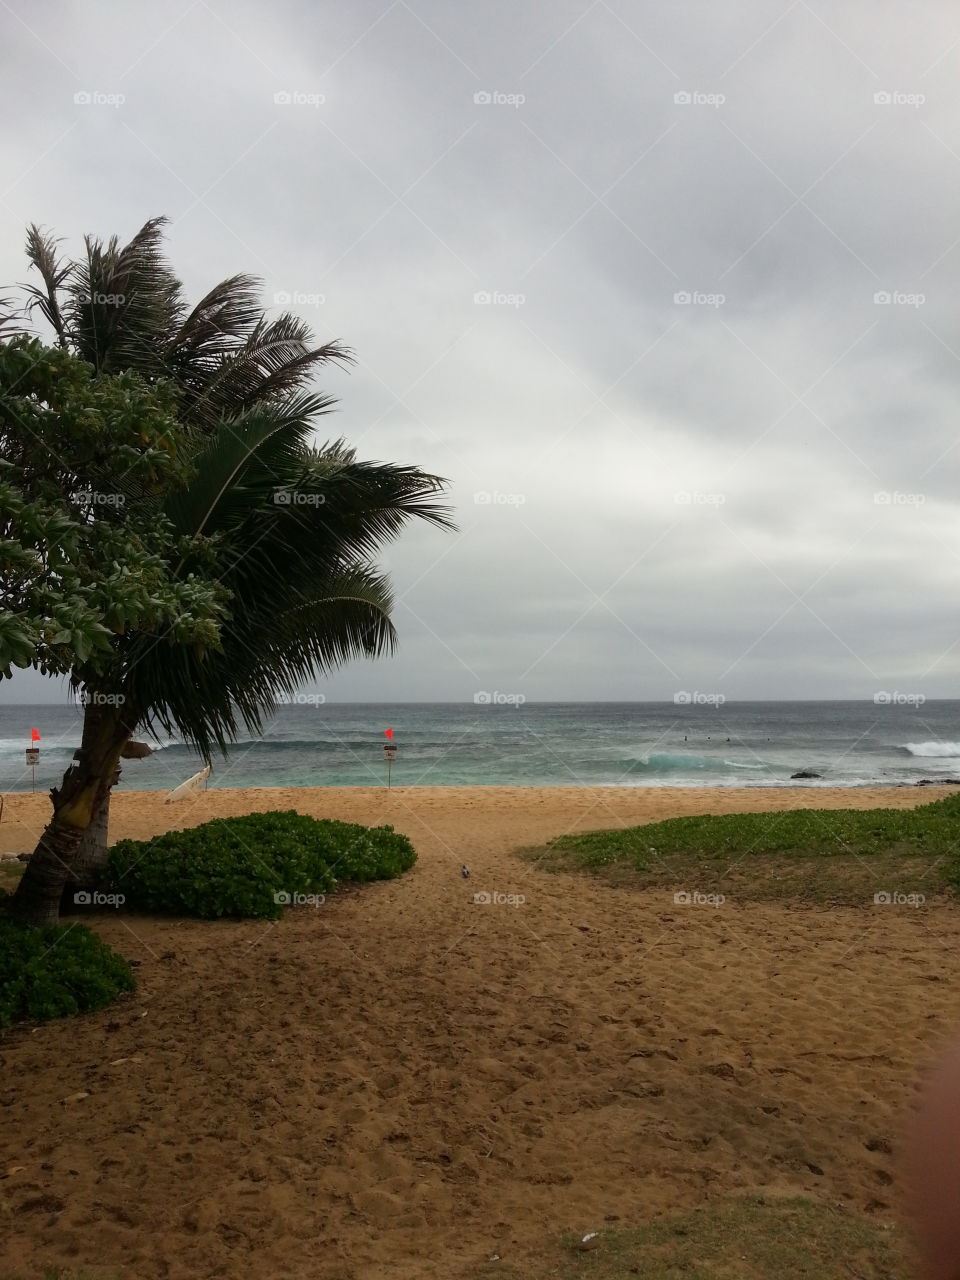 Windy in Hawaii